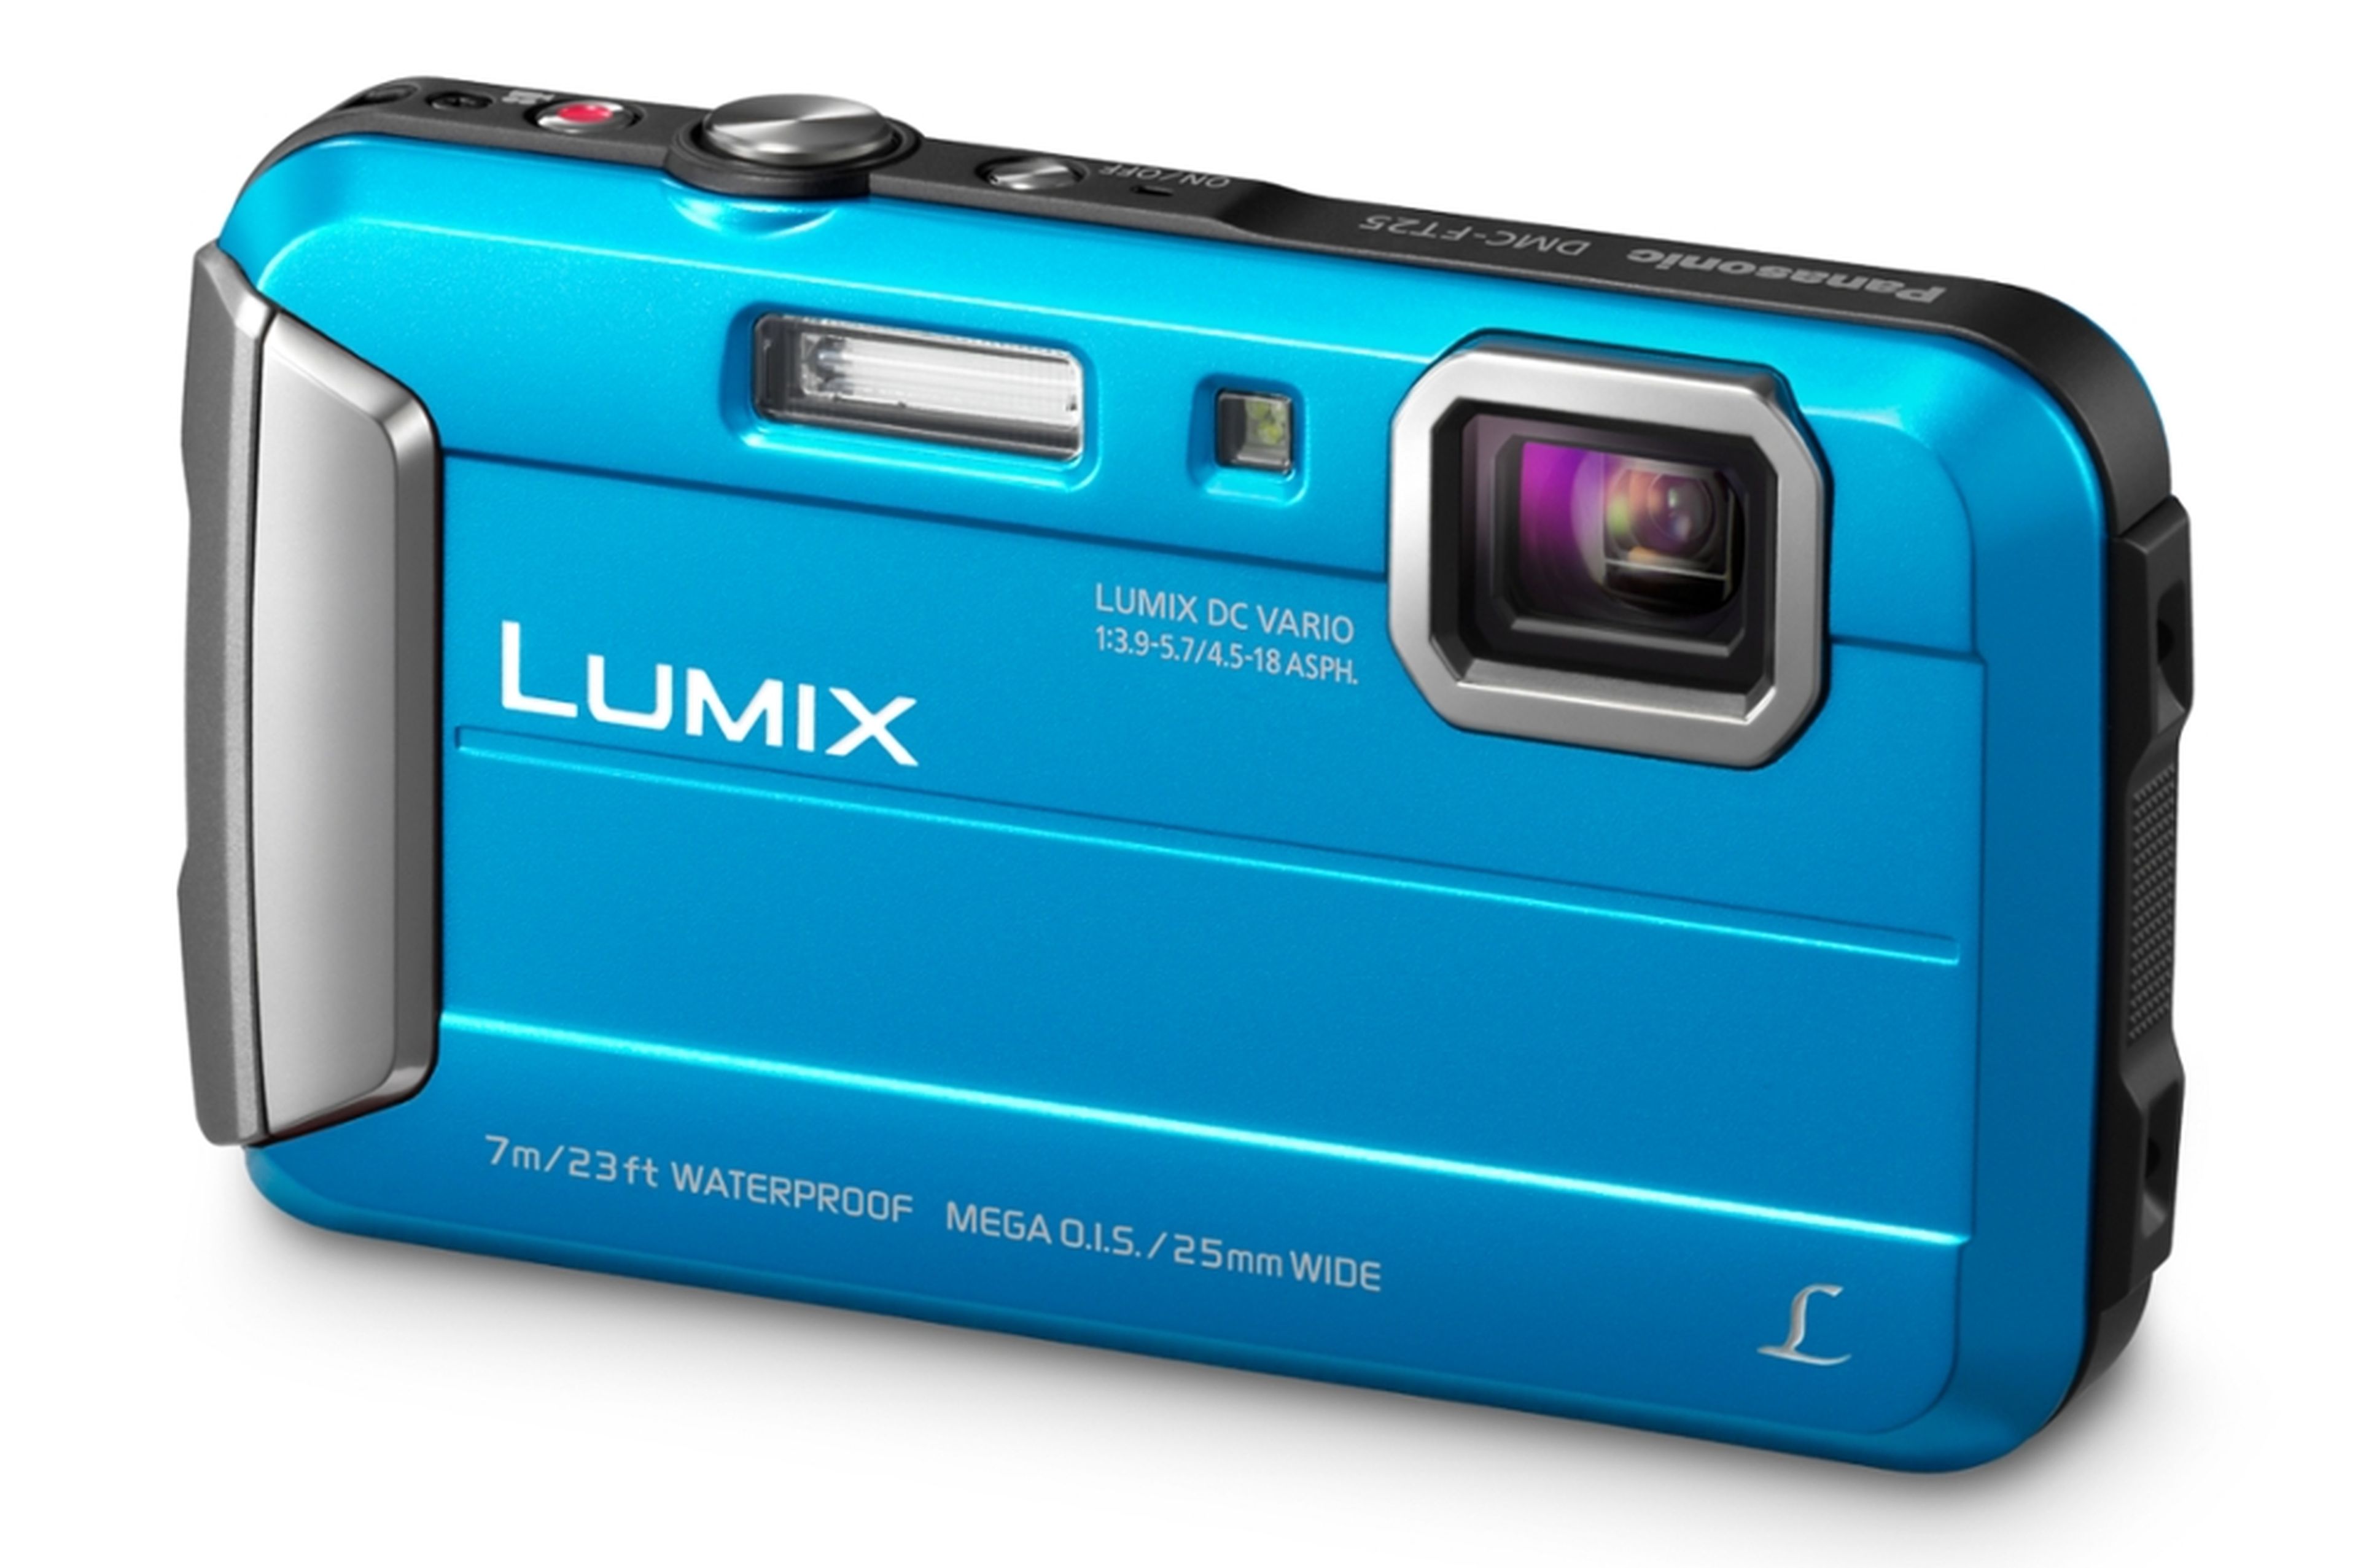 Panasonic Lumix DMC-FT25